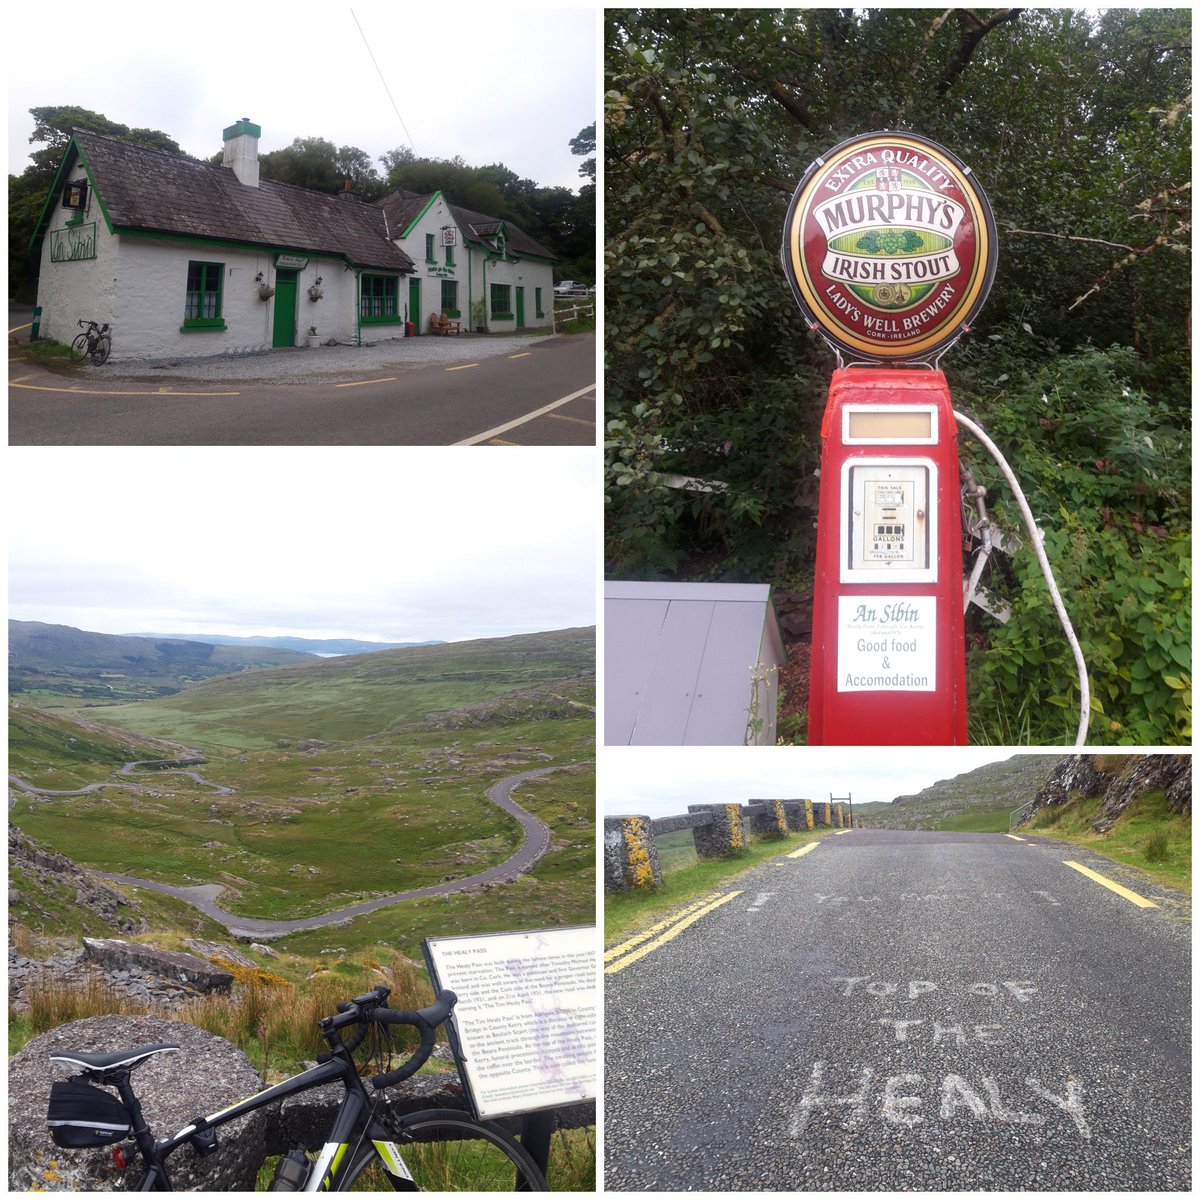 Brilliant spin today on one of Ireland’s greatest cycling routes. Great climbing, stunning views #BearaPeninsula #HealyPass #CahaPass @ExperienceKerry @pure_cork @the_full_irish_ @FollowIreland @Failte_Ireland